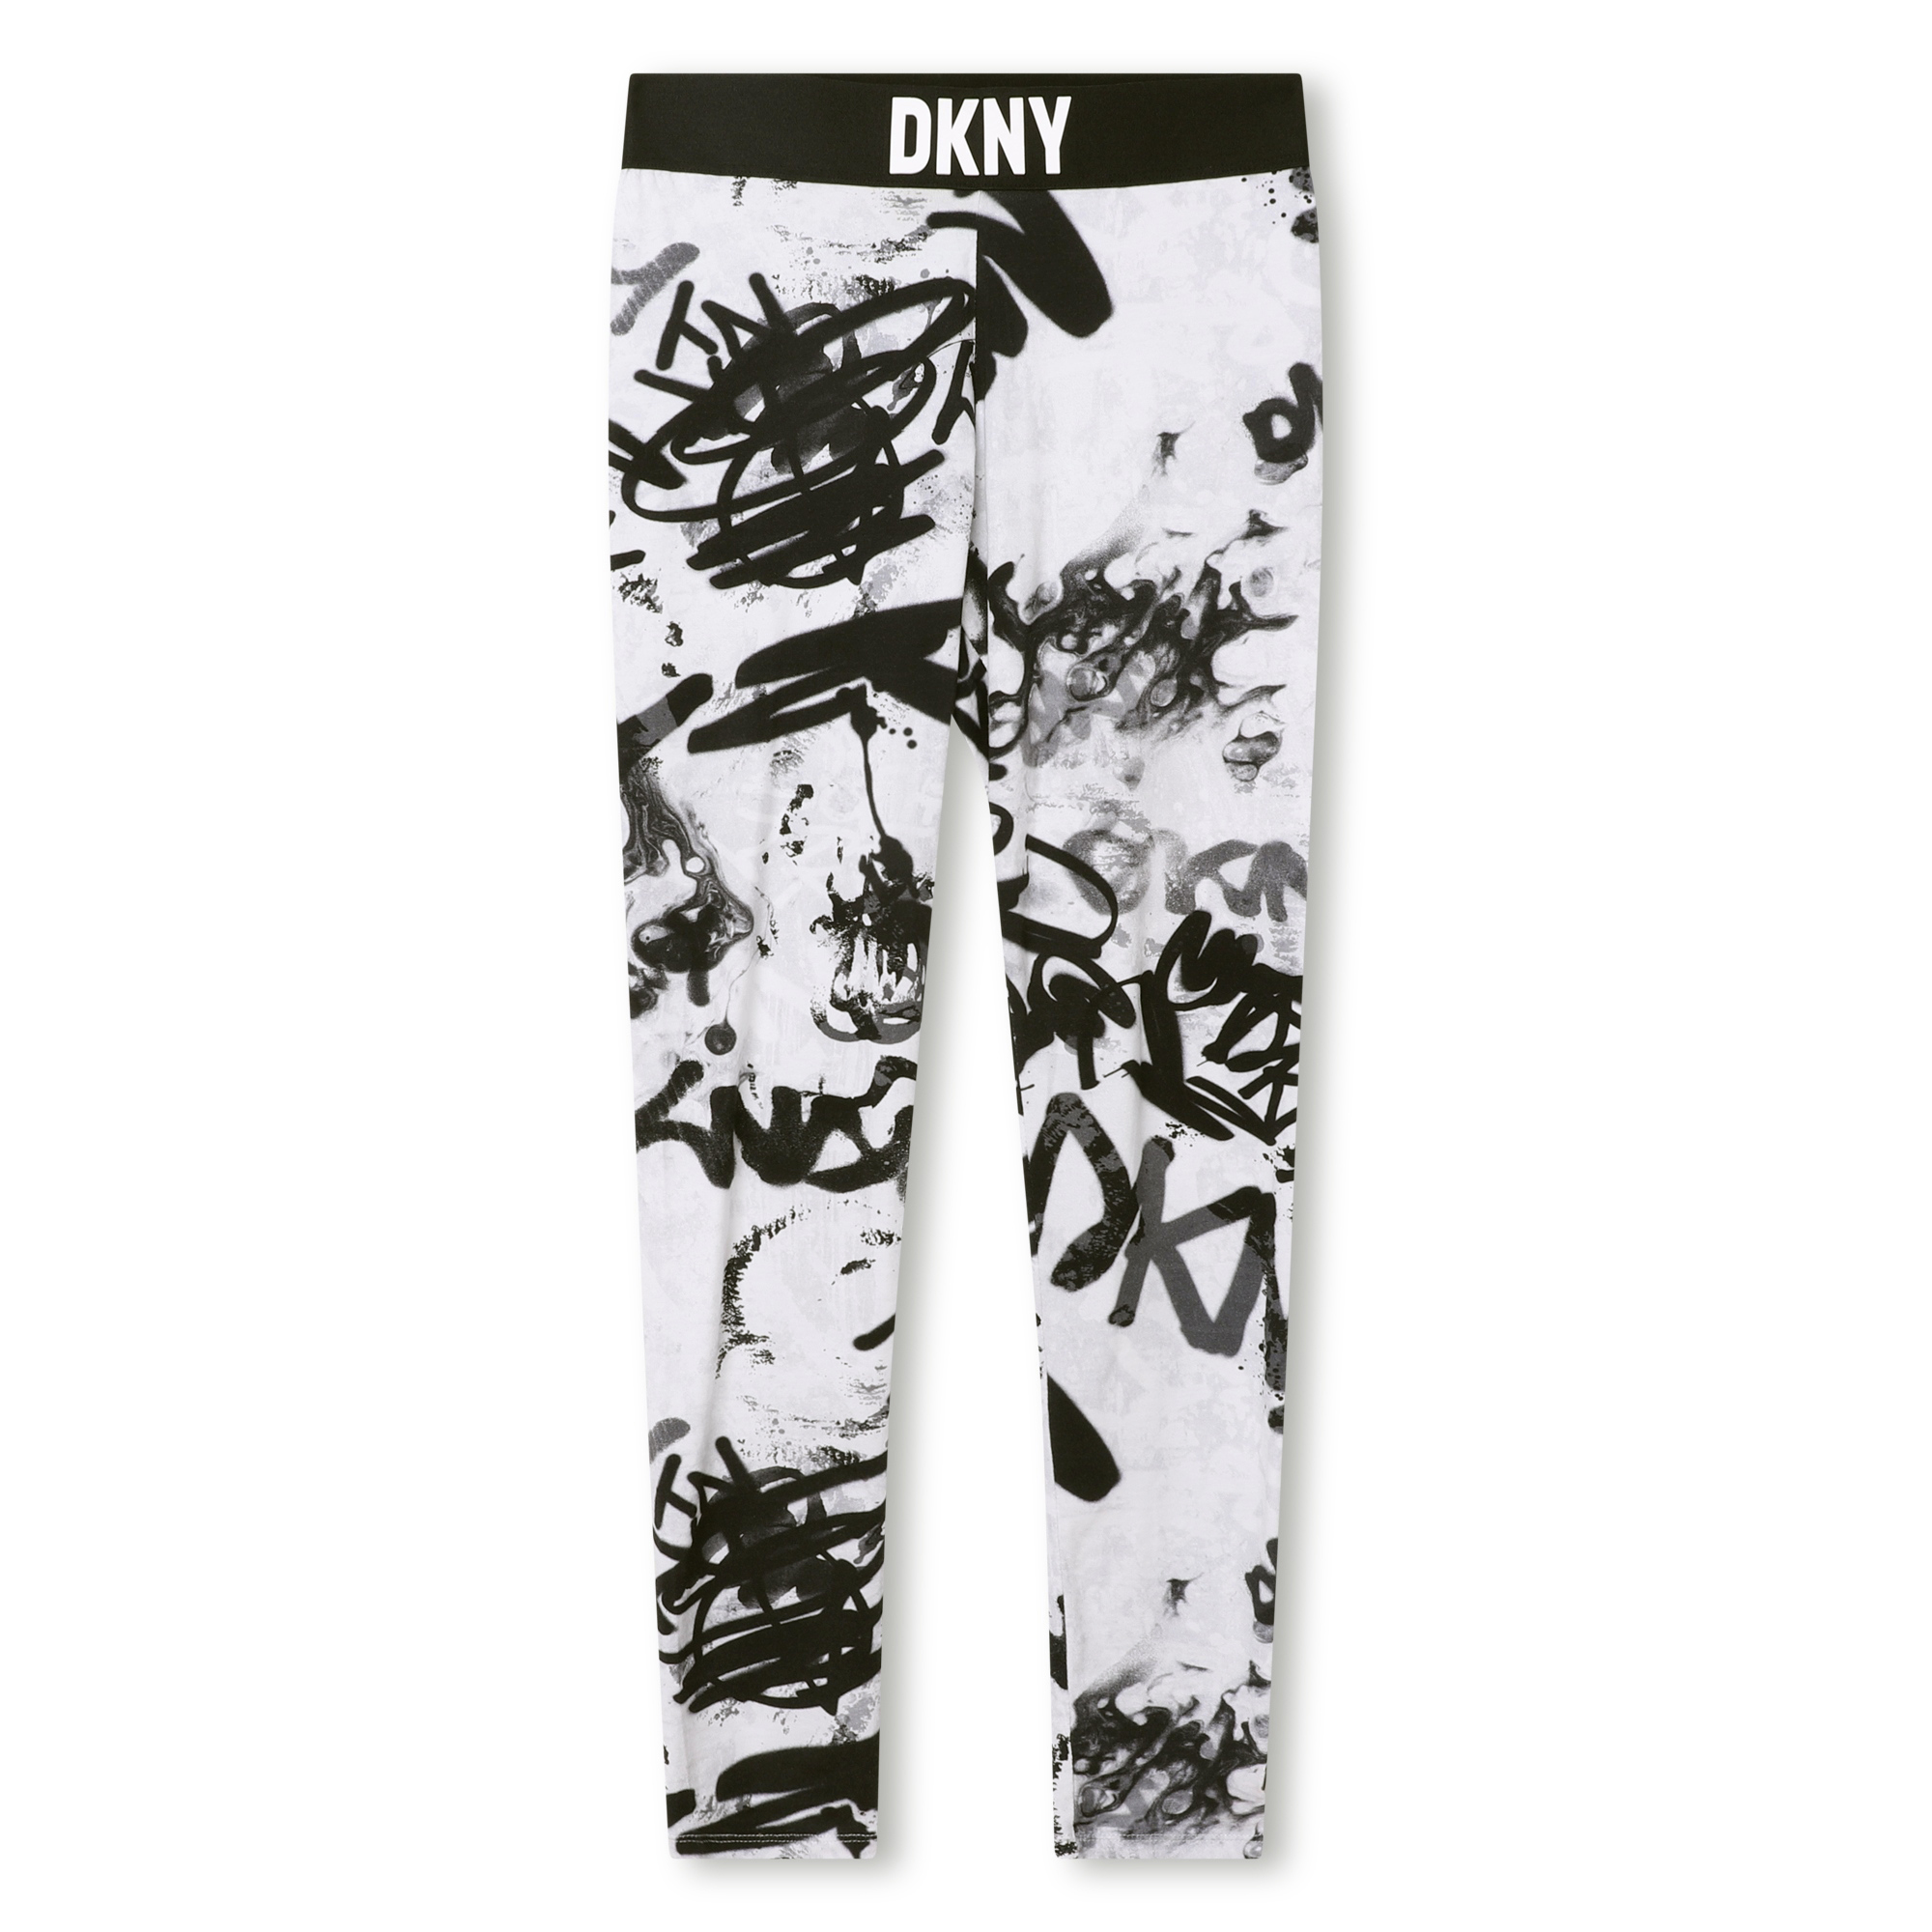 DKNY Sport Animal Print High Waist Leggings Pink Size Medium | eBay